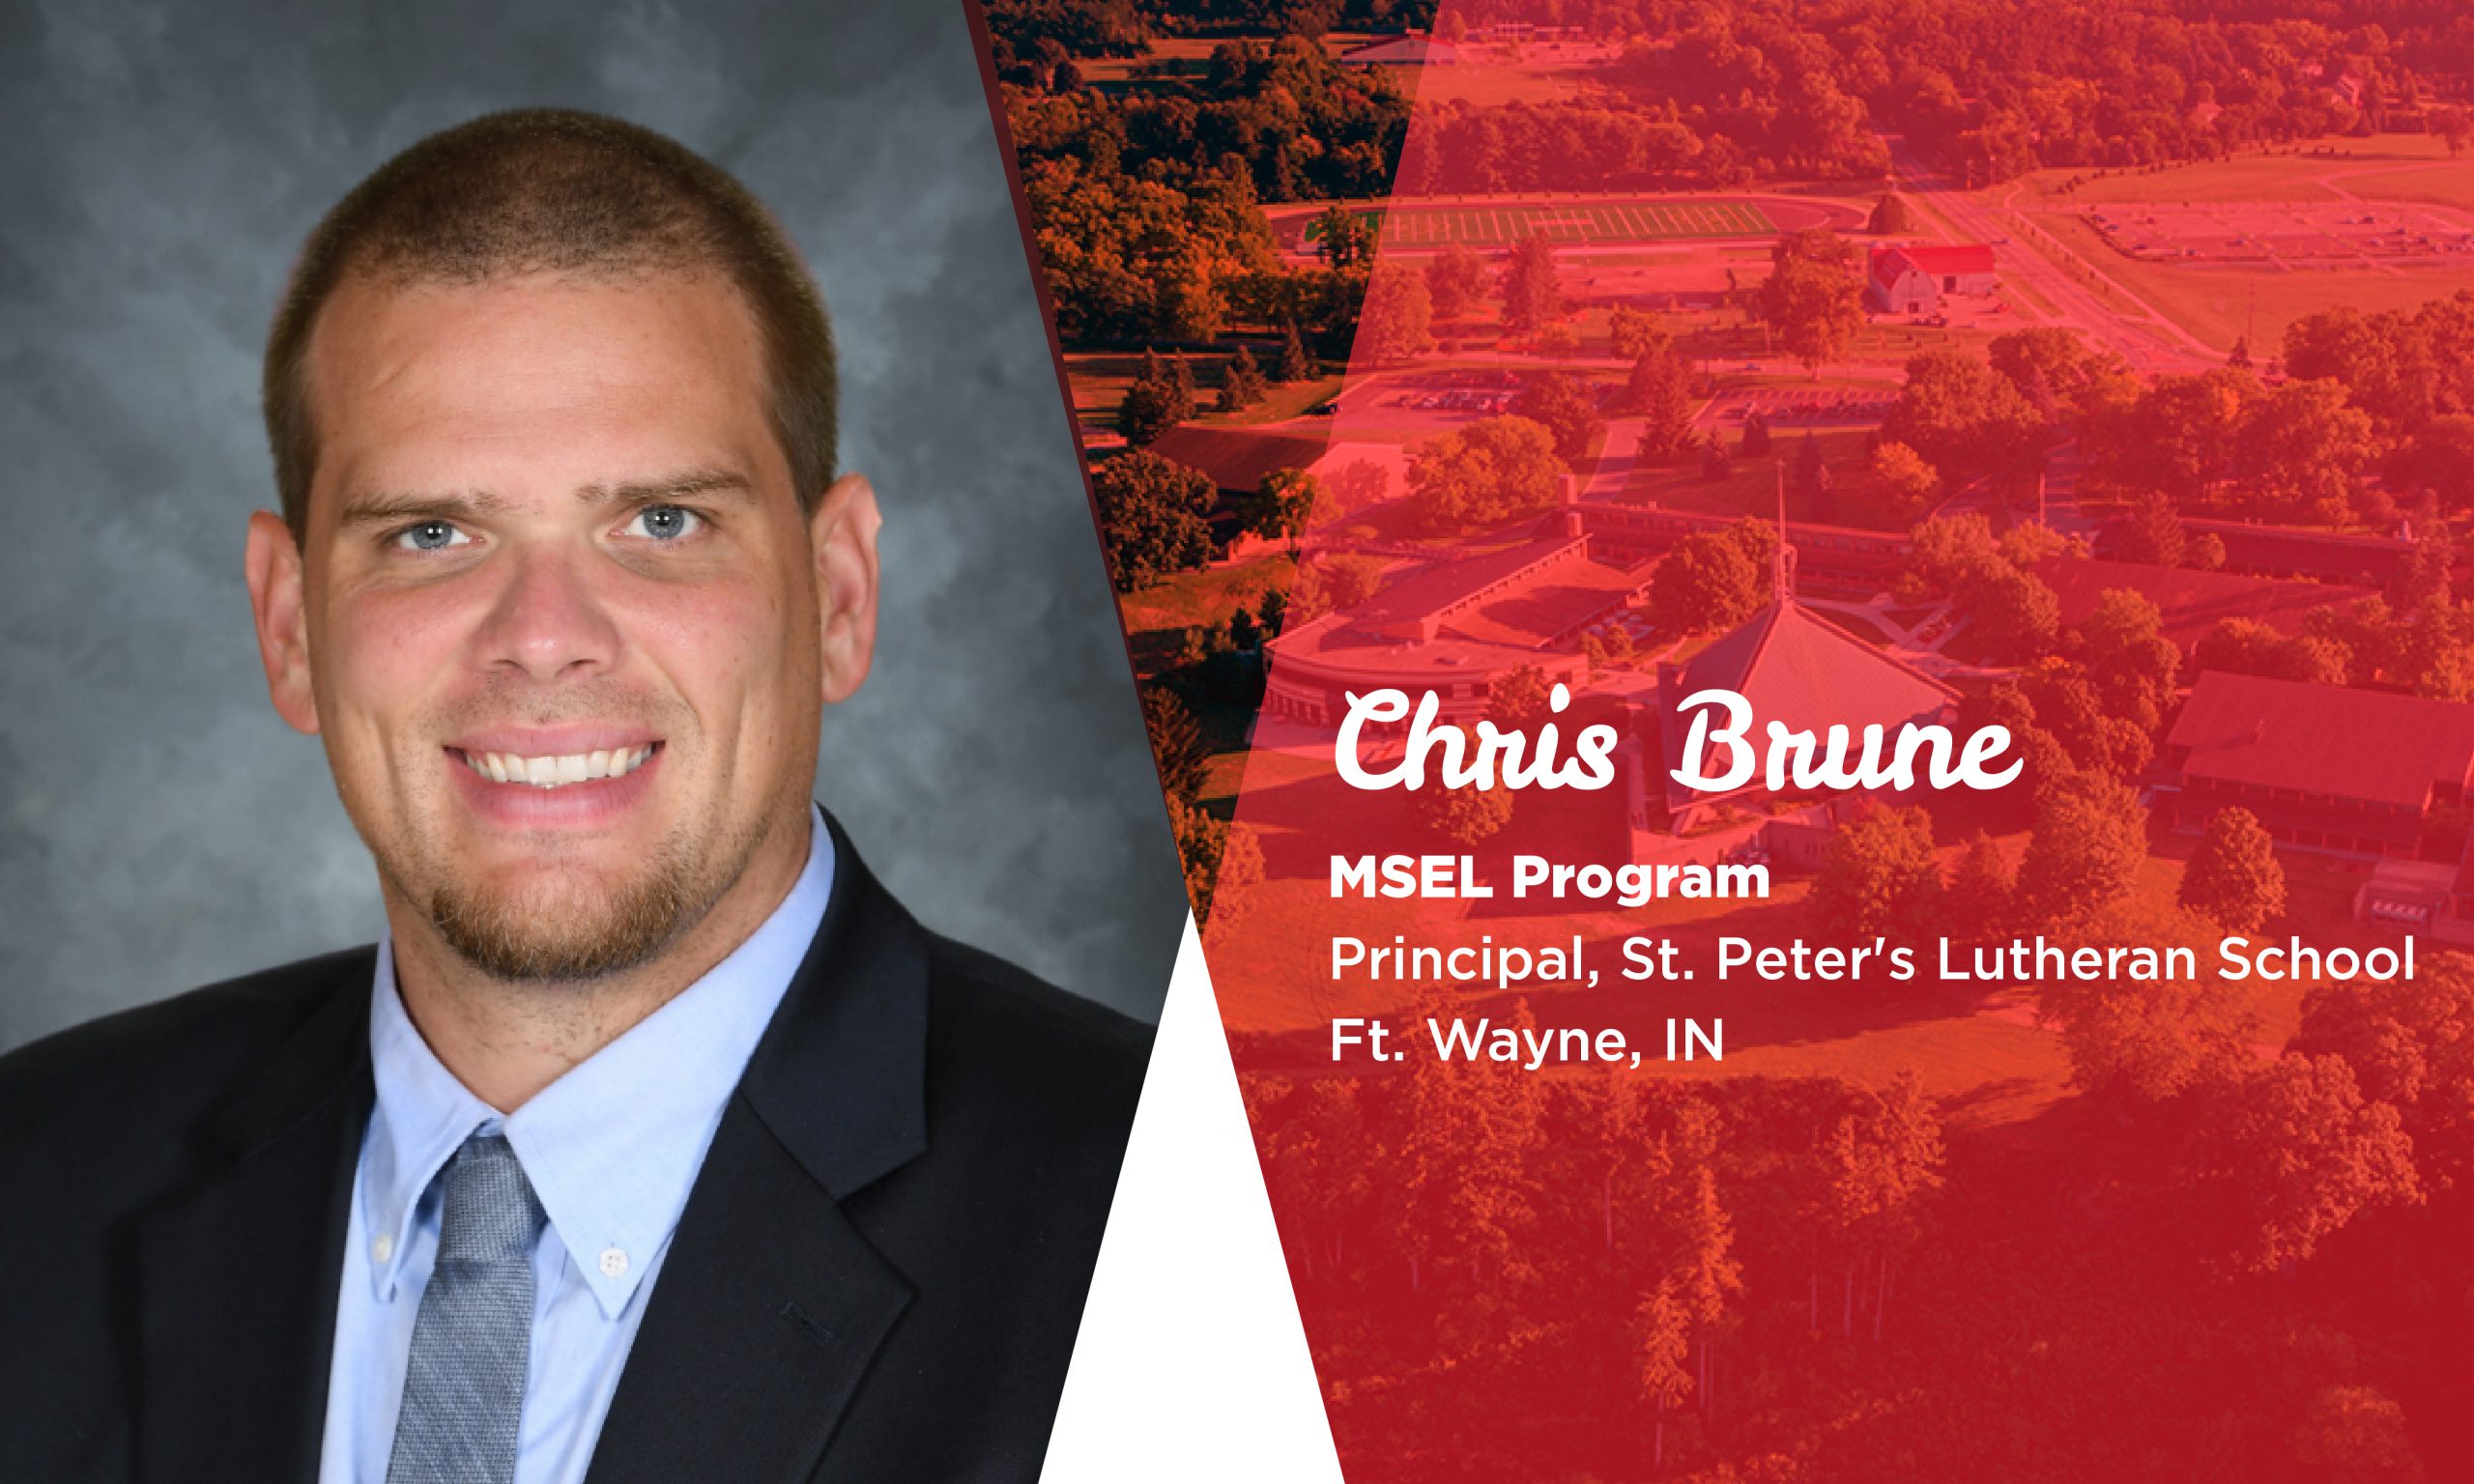 Chris Brune received his educational leadership master's